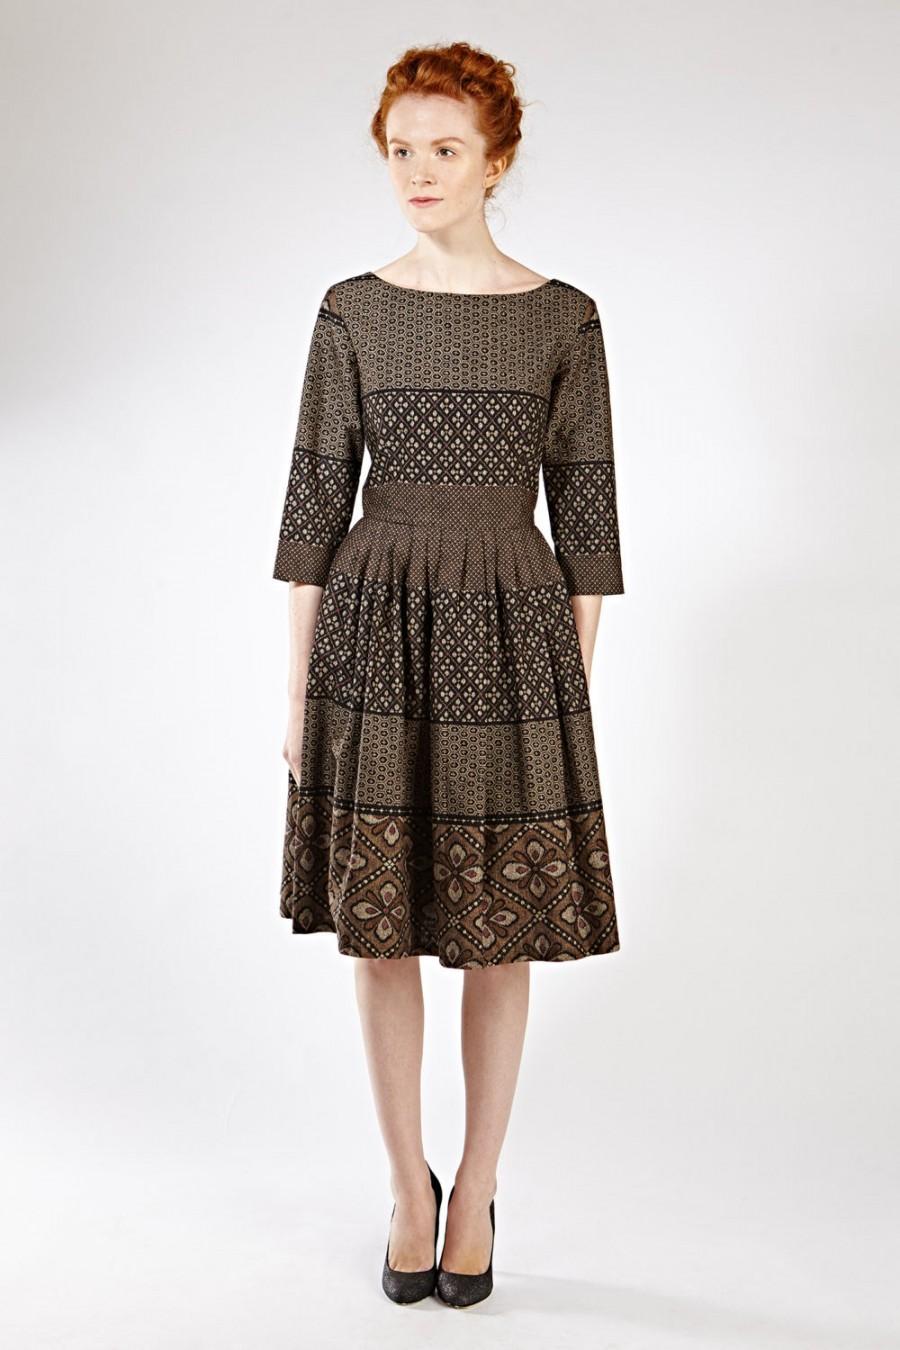 Mariage - Women Midi Dress, Brown Dress, Secretary Dress, 1950's Dress, Linen Dress, Vintage Style Dress, Office Dress, Retro Dress, Minimalist,Modest